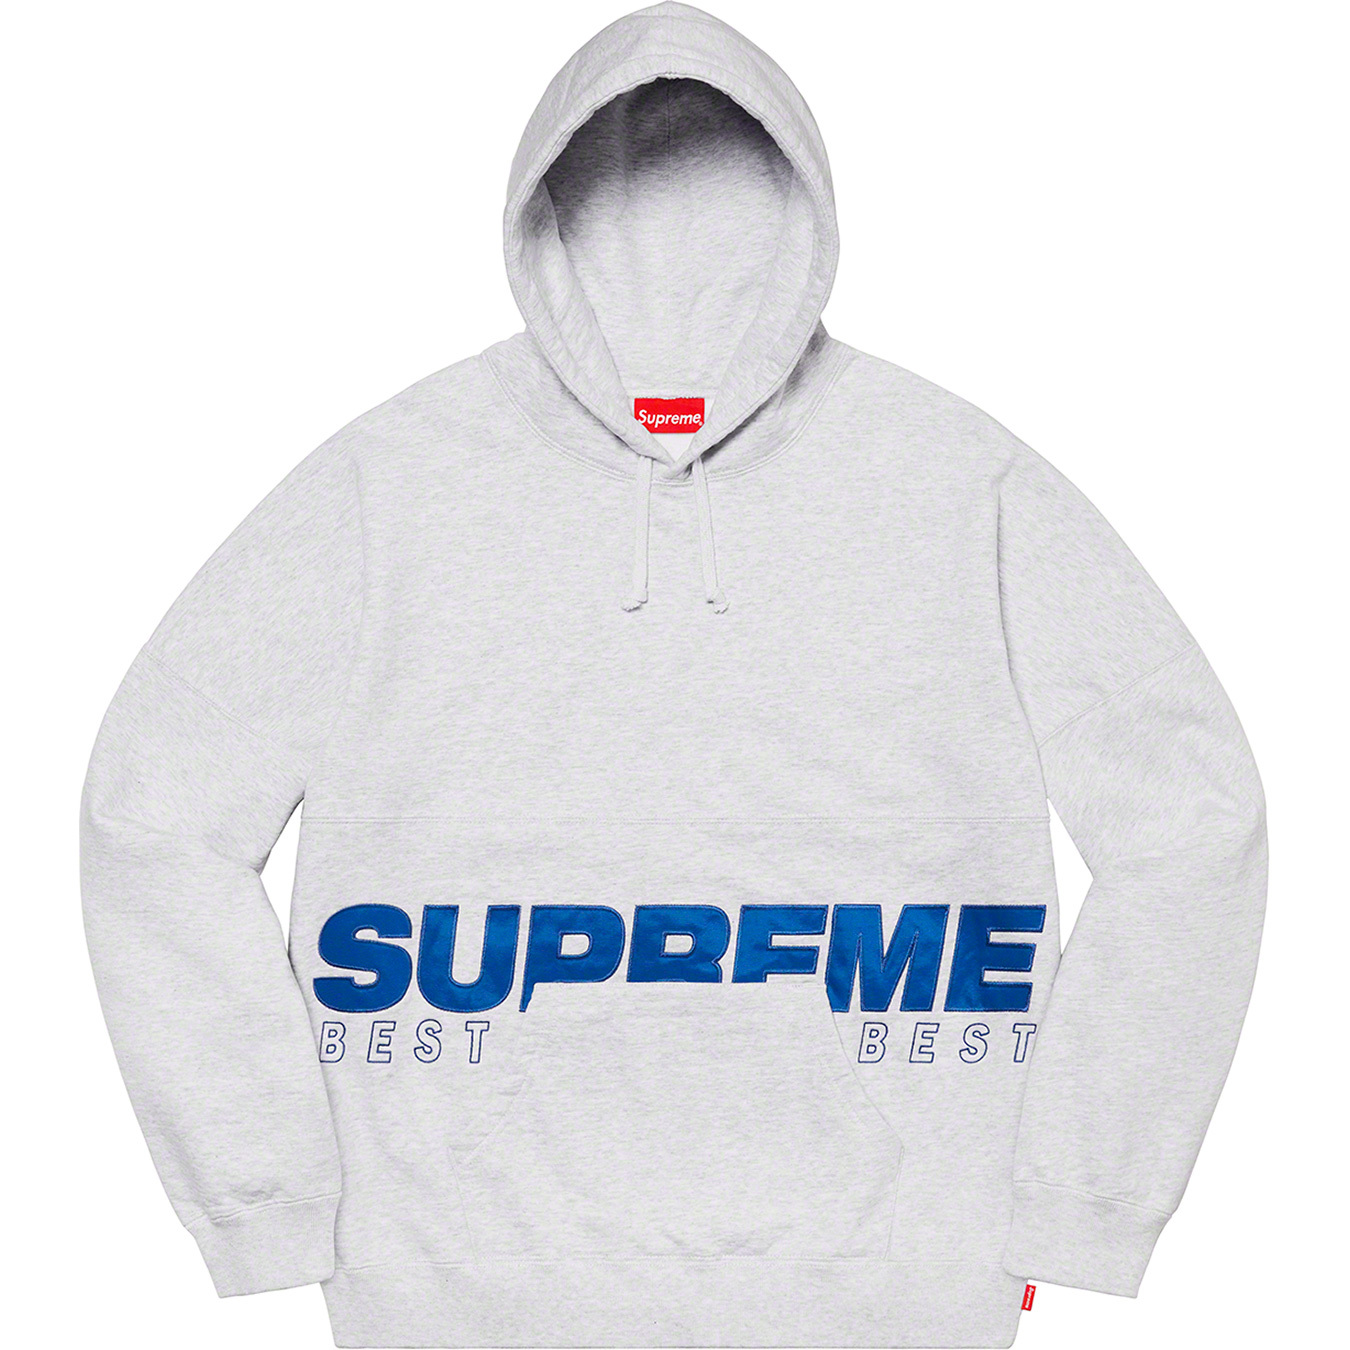 Best Of The Best Hooded Sweatshirt | Supreme 20fw